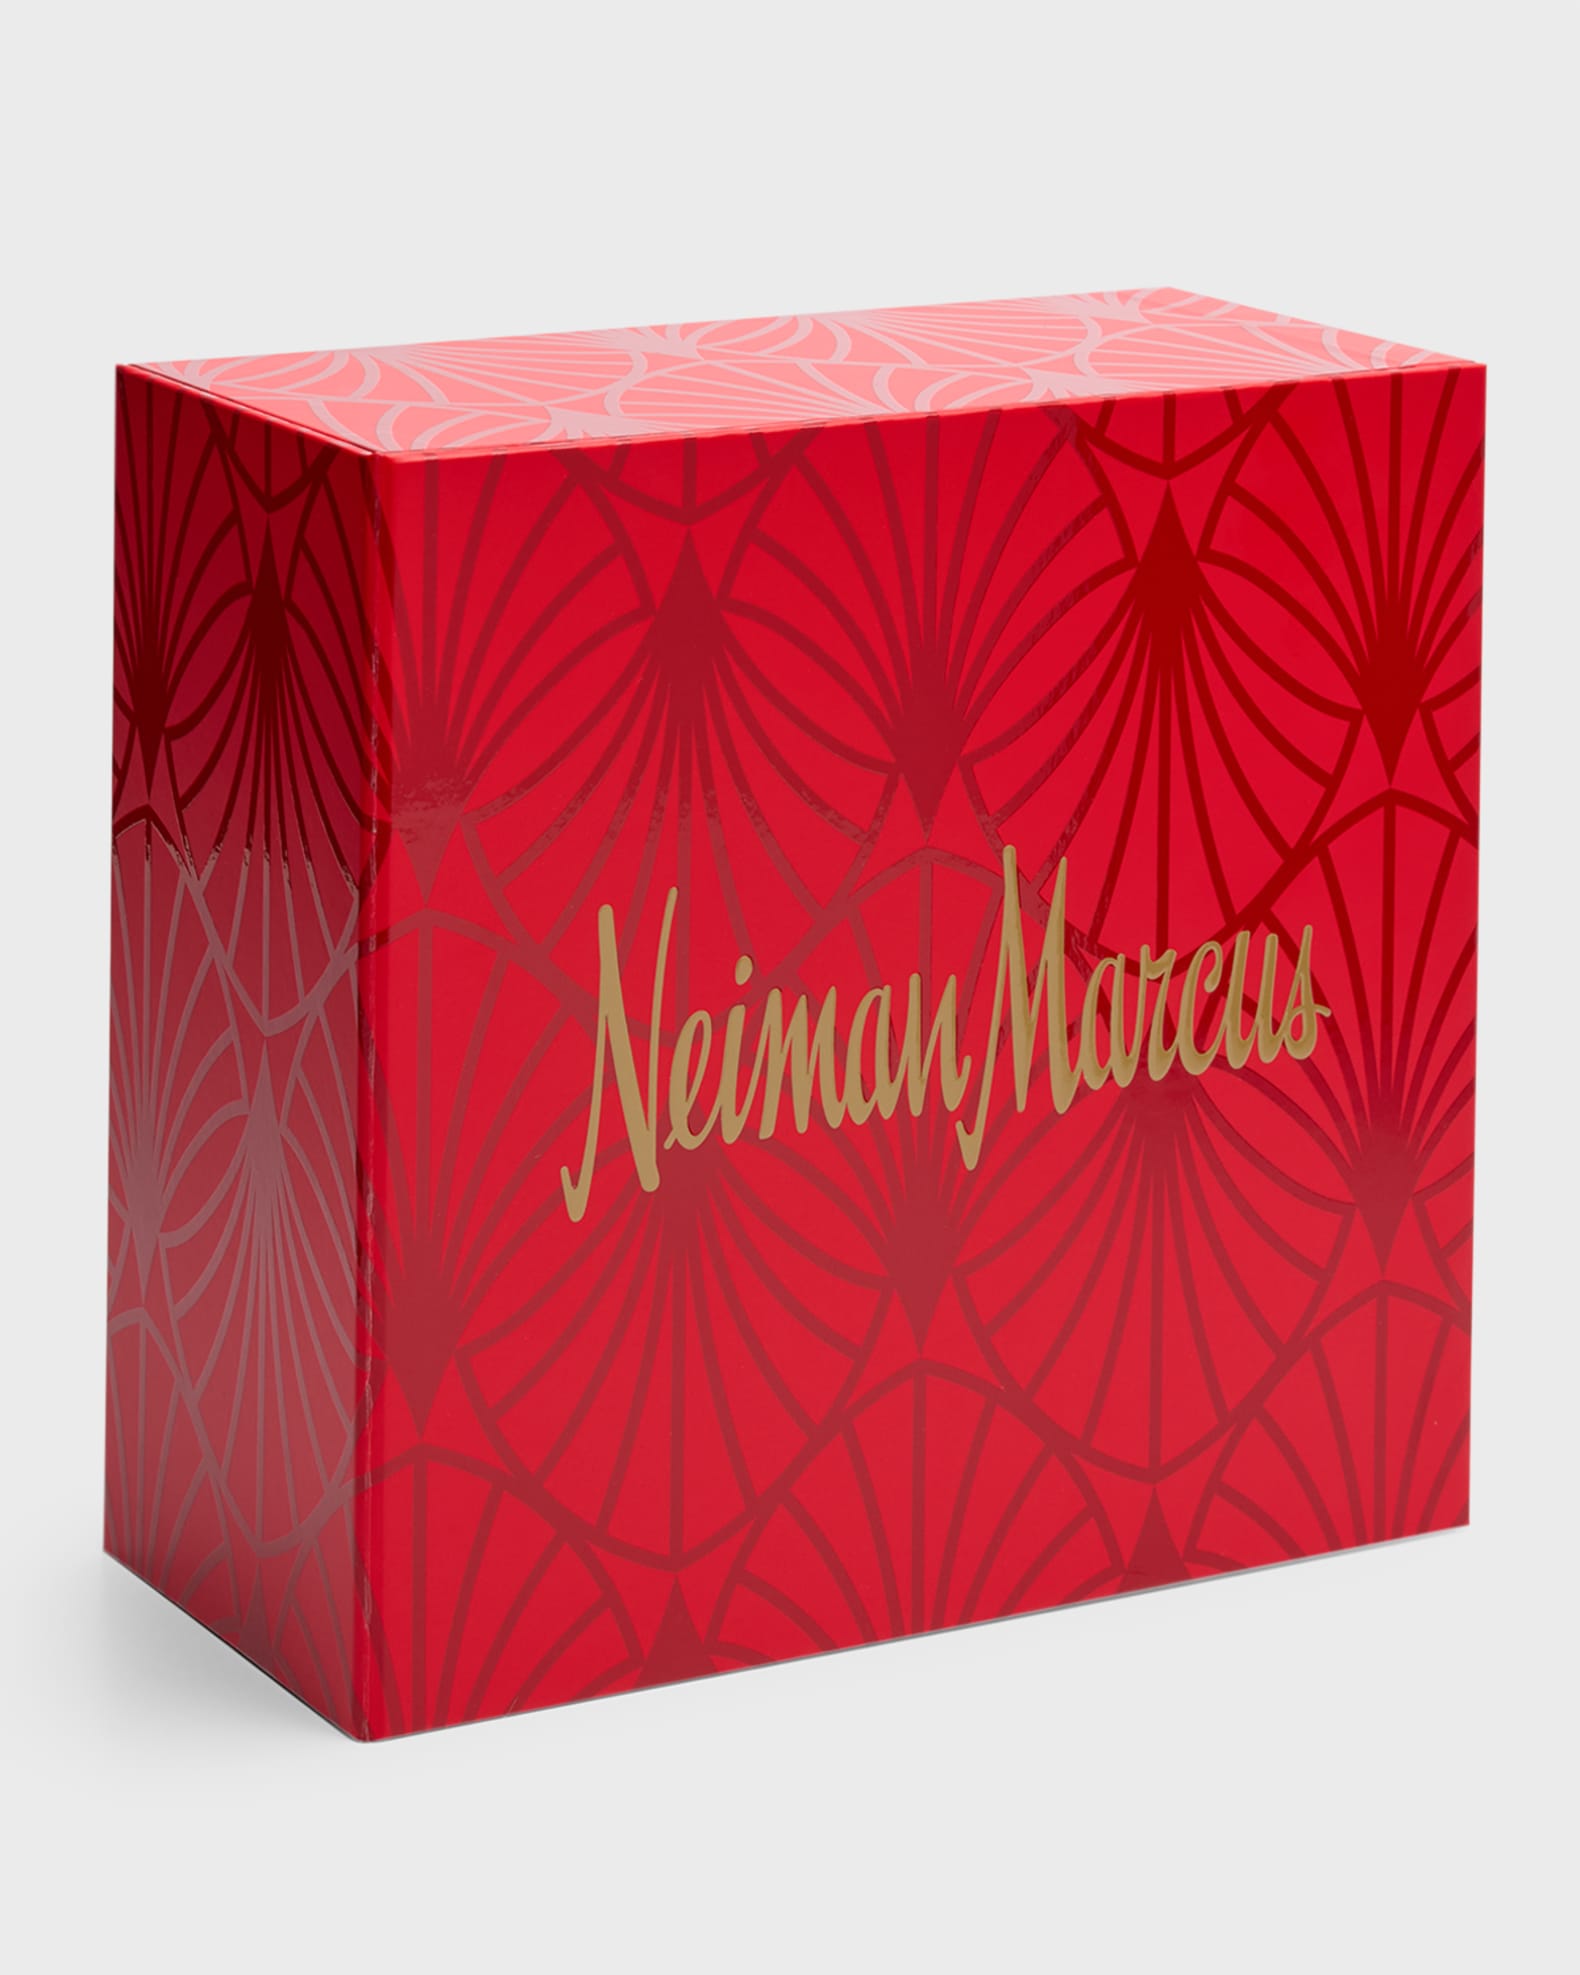 Fragrance, Neiman Marcus